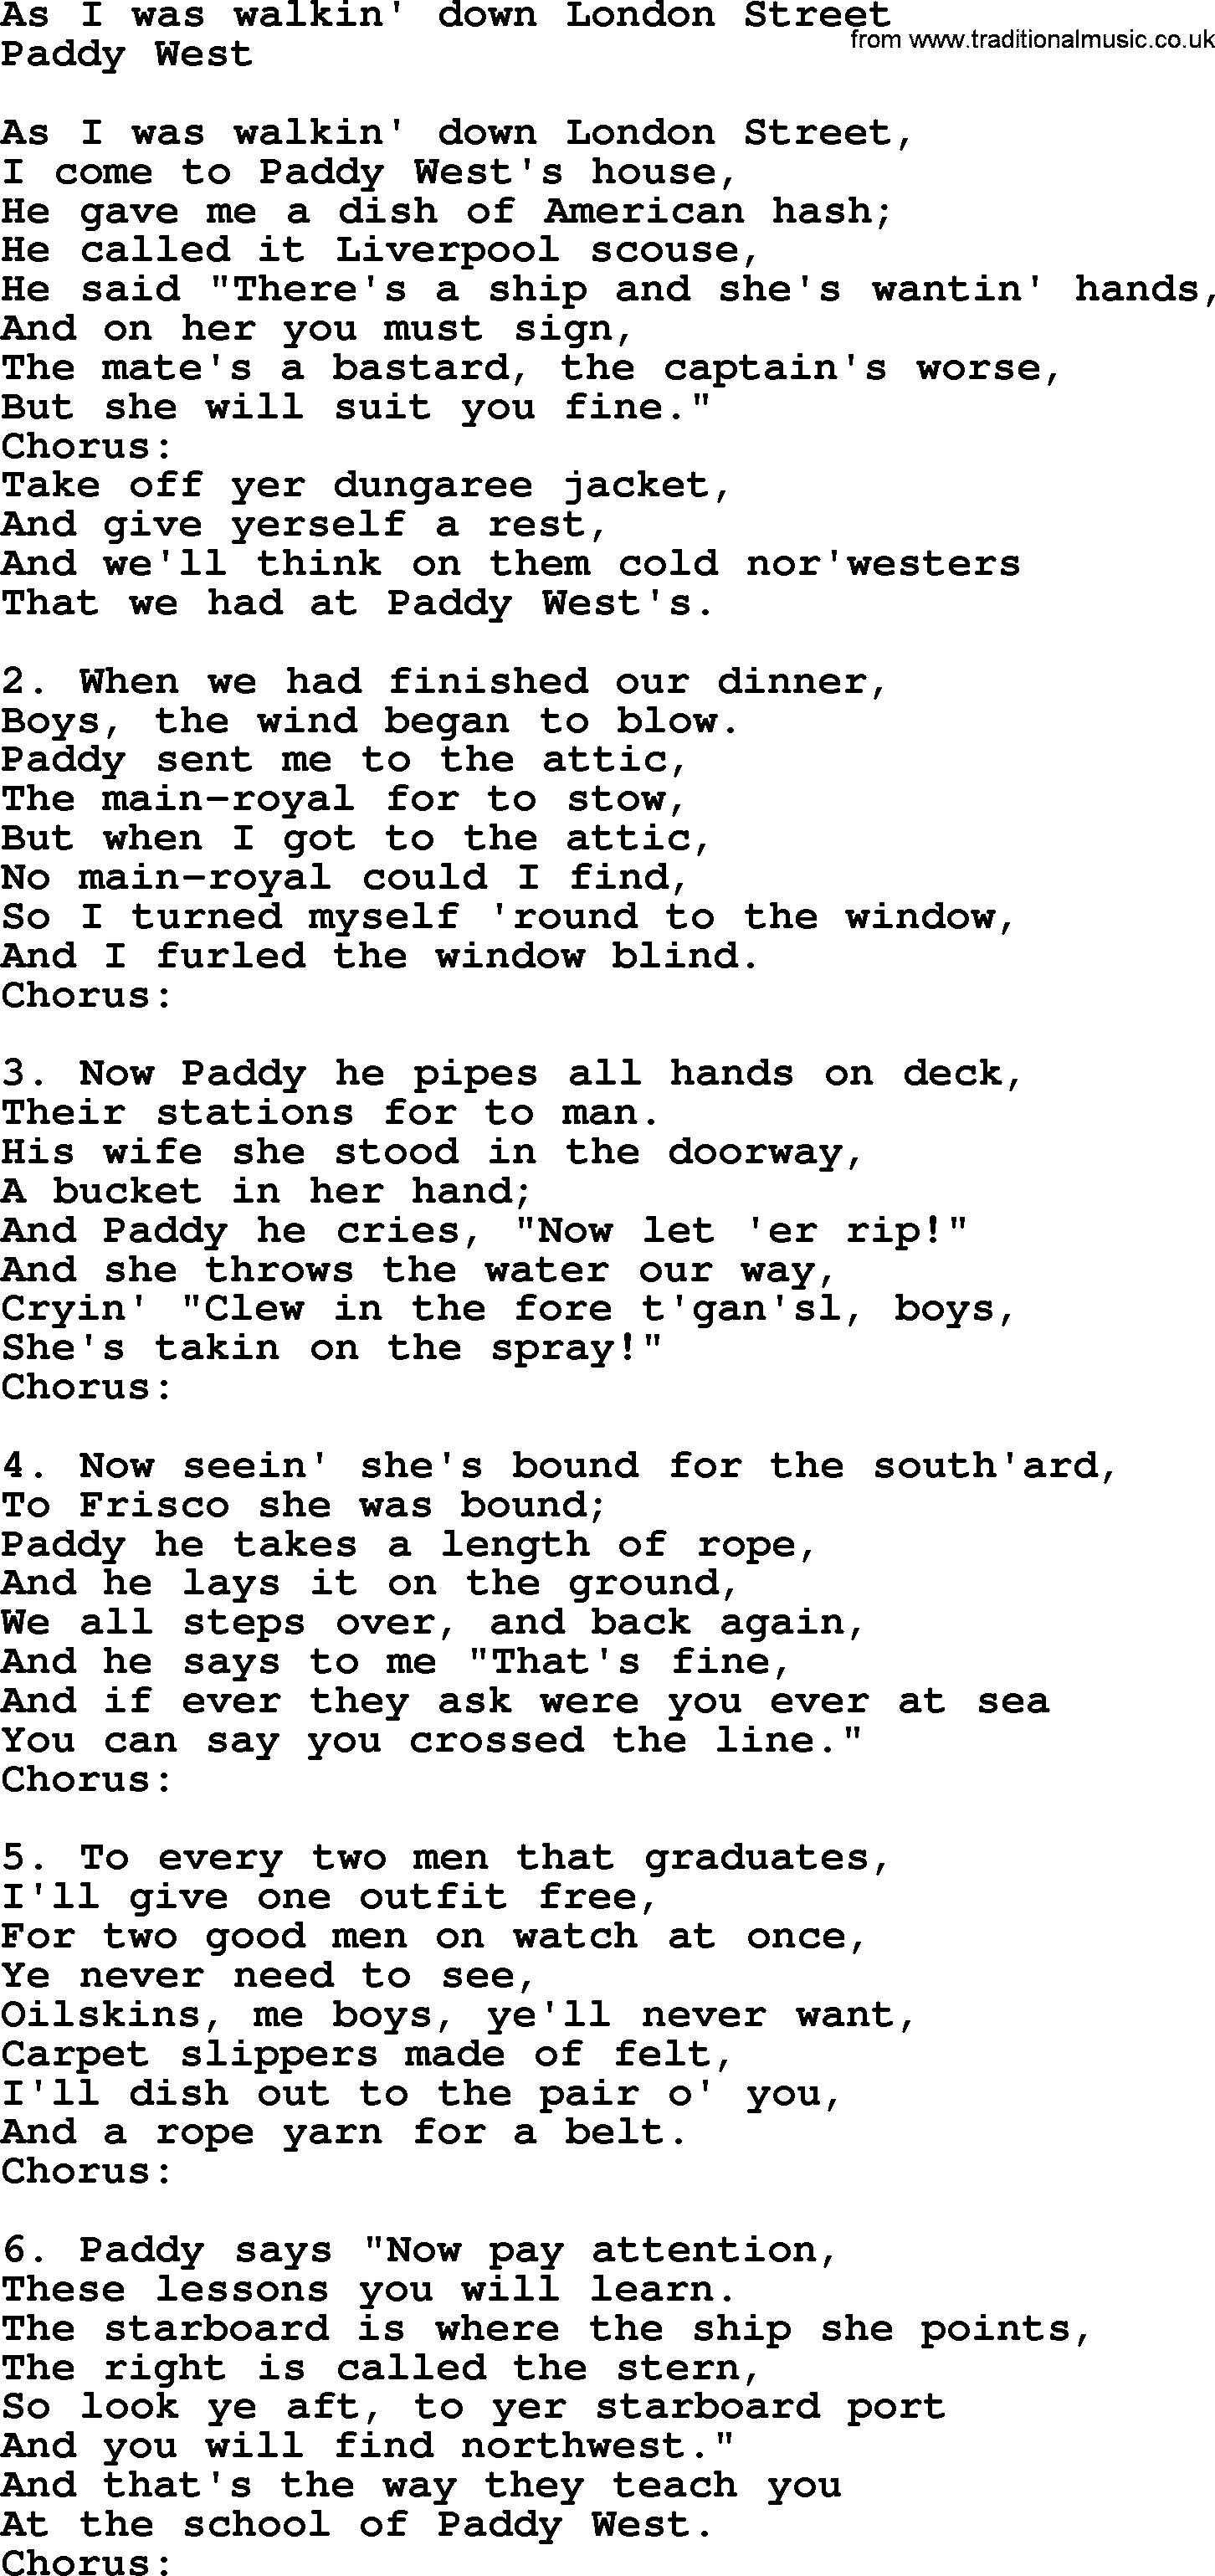 Sea Song or Shantie: As I Was Walkin Down London Street, lyrics